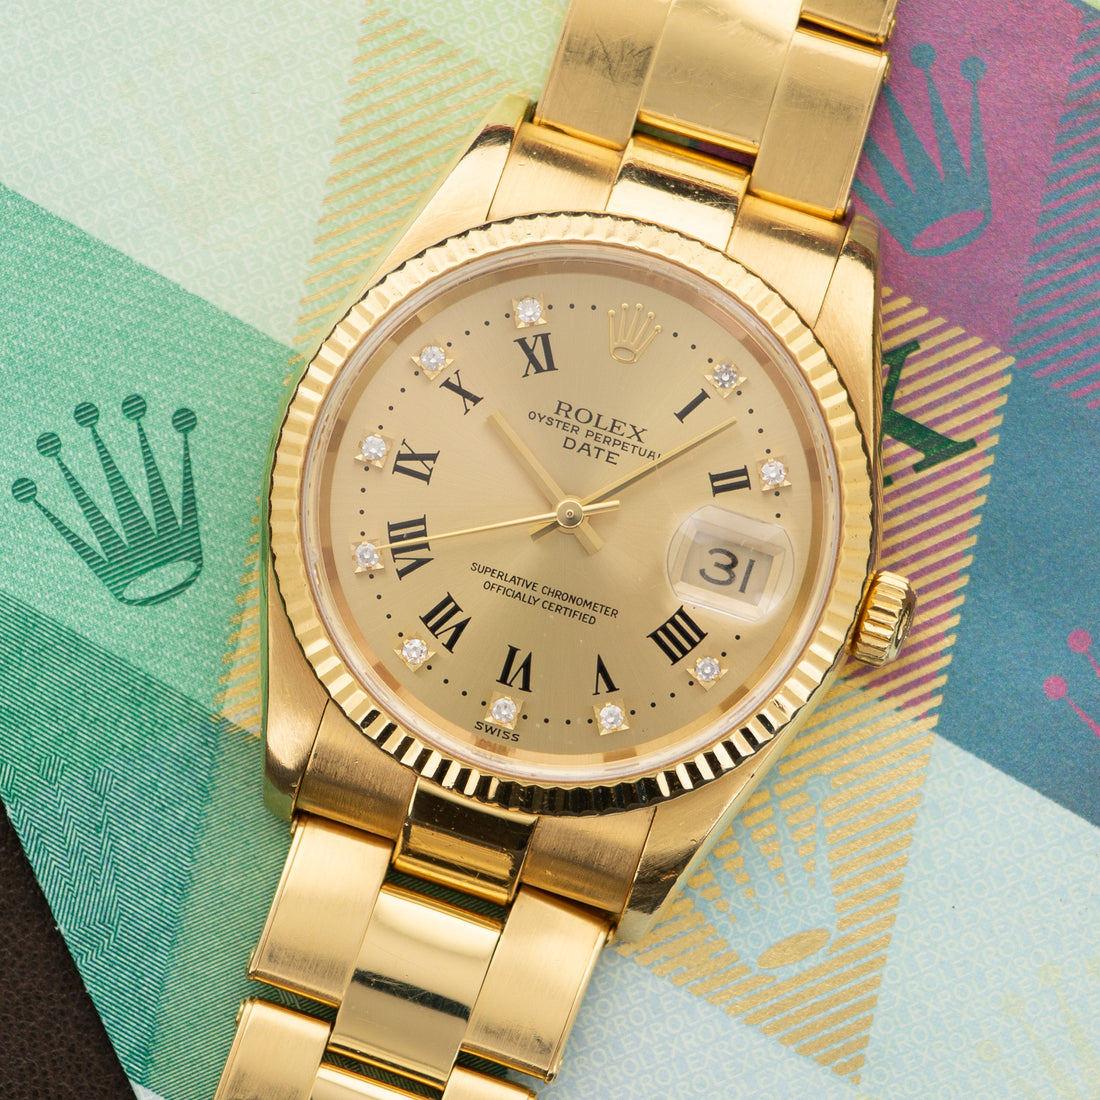 Rolex Yellow Gold Date Diamond Watch Ref. 15238